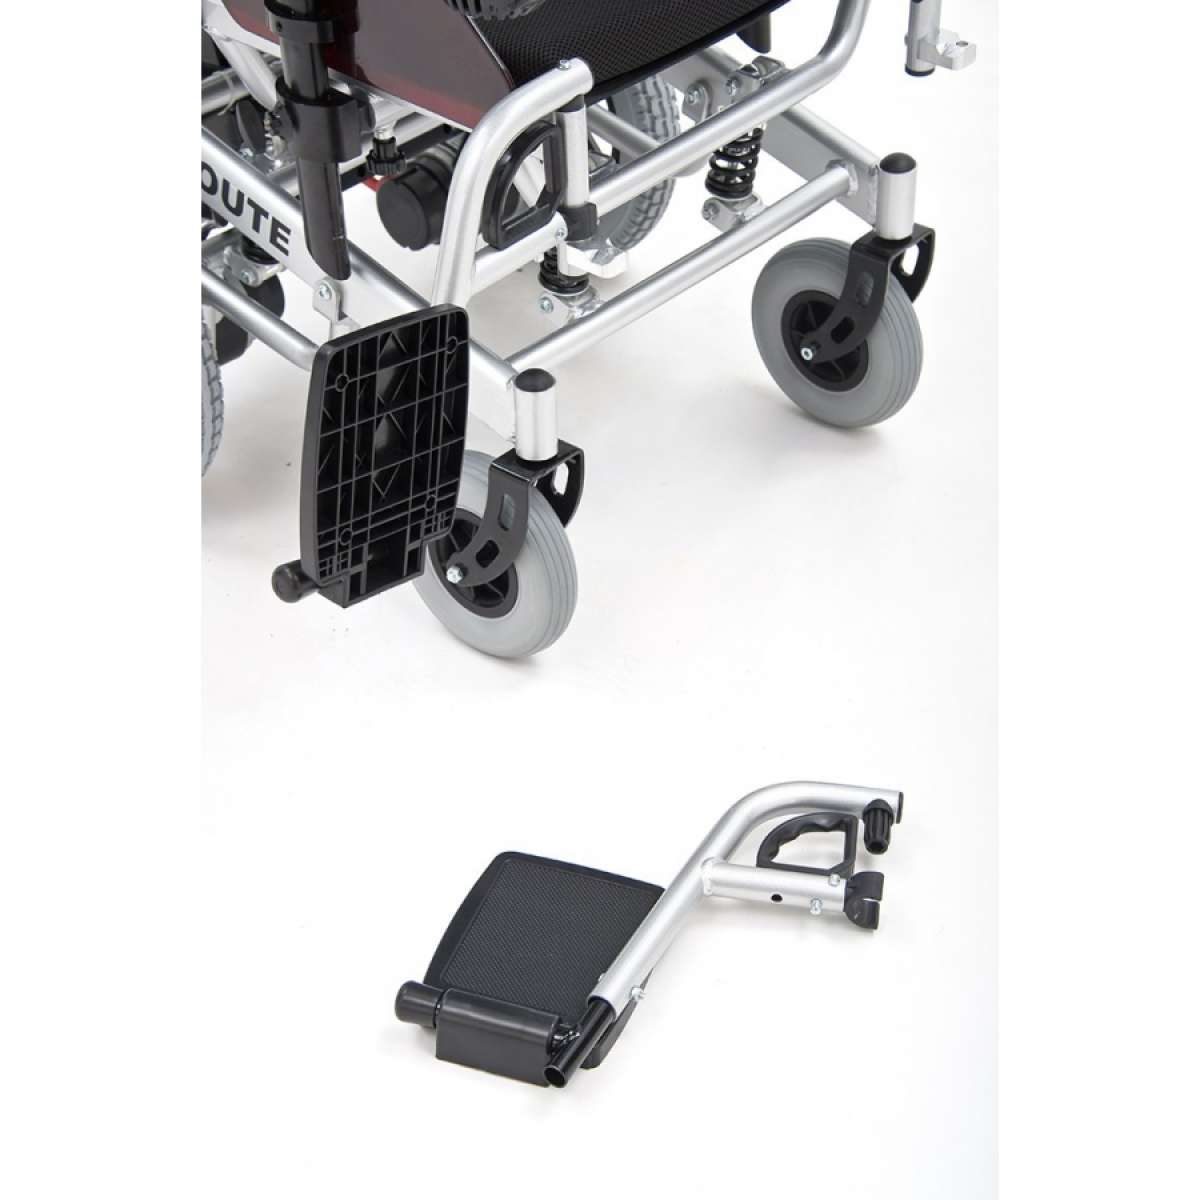 Алюминиевая кресло-коляска MET ROUTE 14